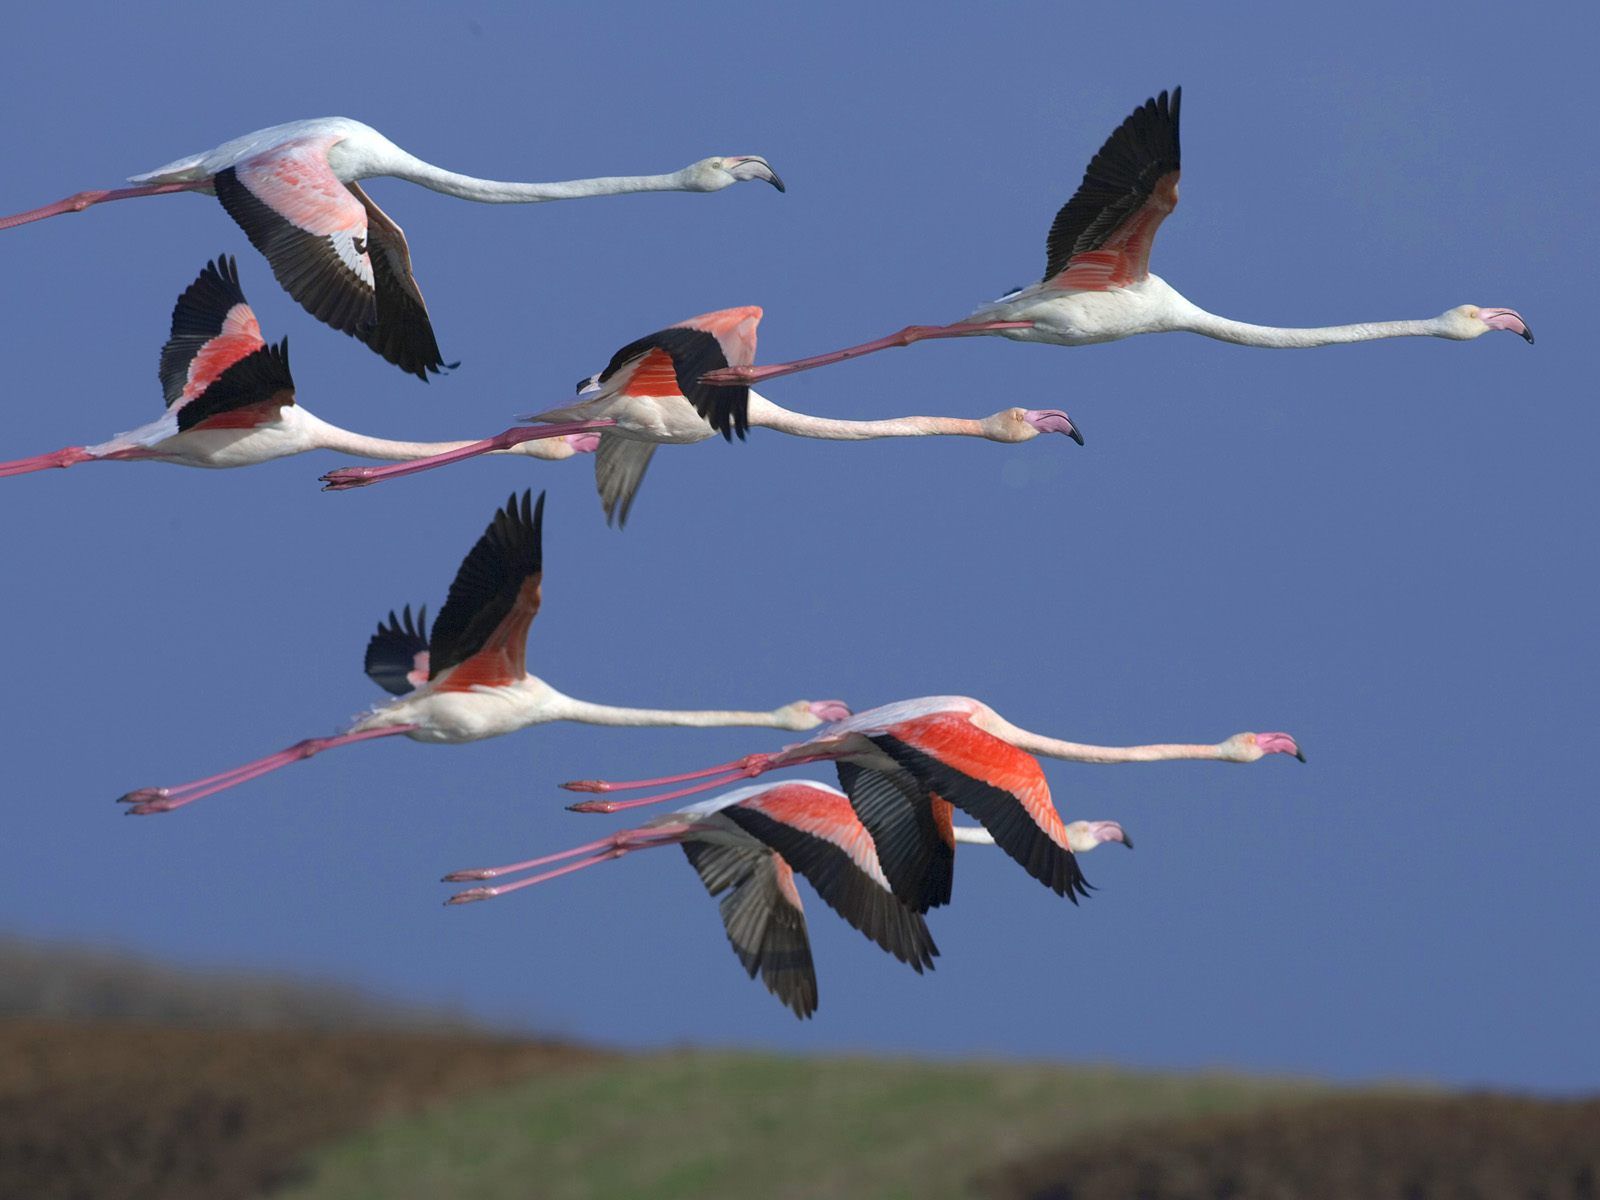 135108 Bild herunterladen tiere, vögel, sky, flamingo, flug, herde - Hintergrundbilder und Bildschirmschoner kostenlos